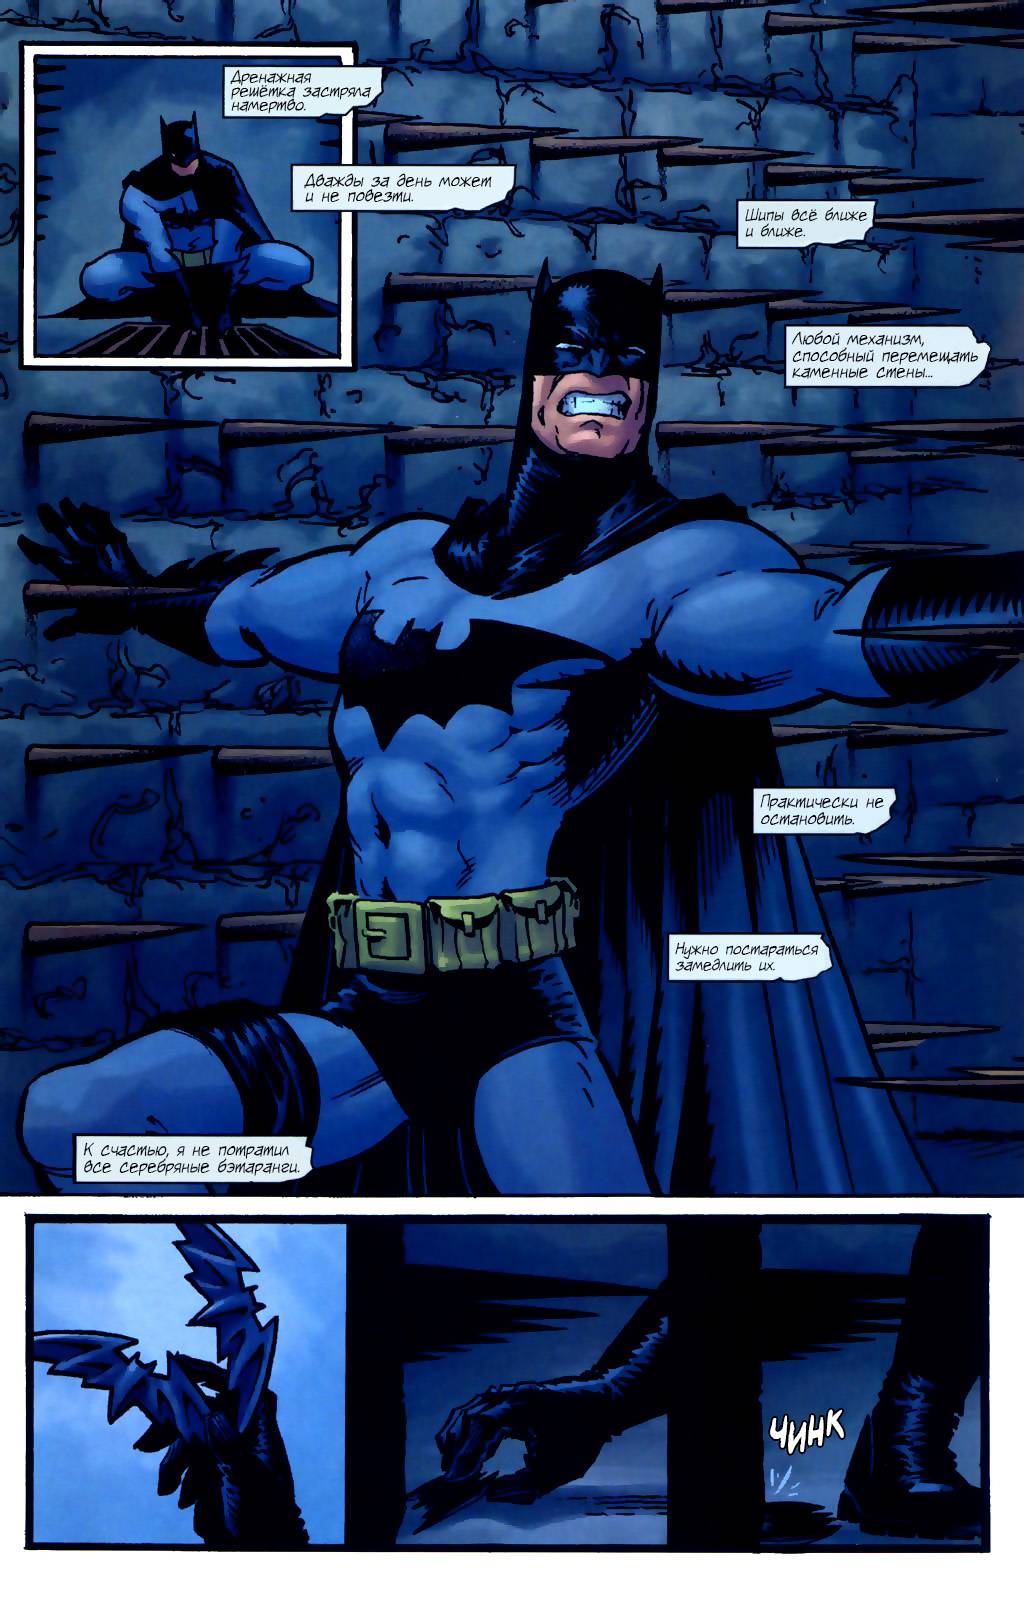 Восход Тёмной Луны - Бэтмен и Безумный Монах №5 онлайн